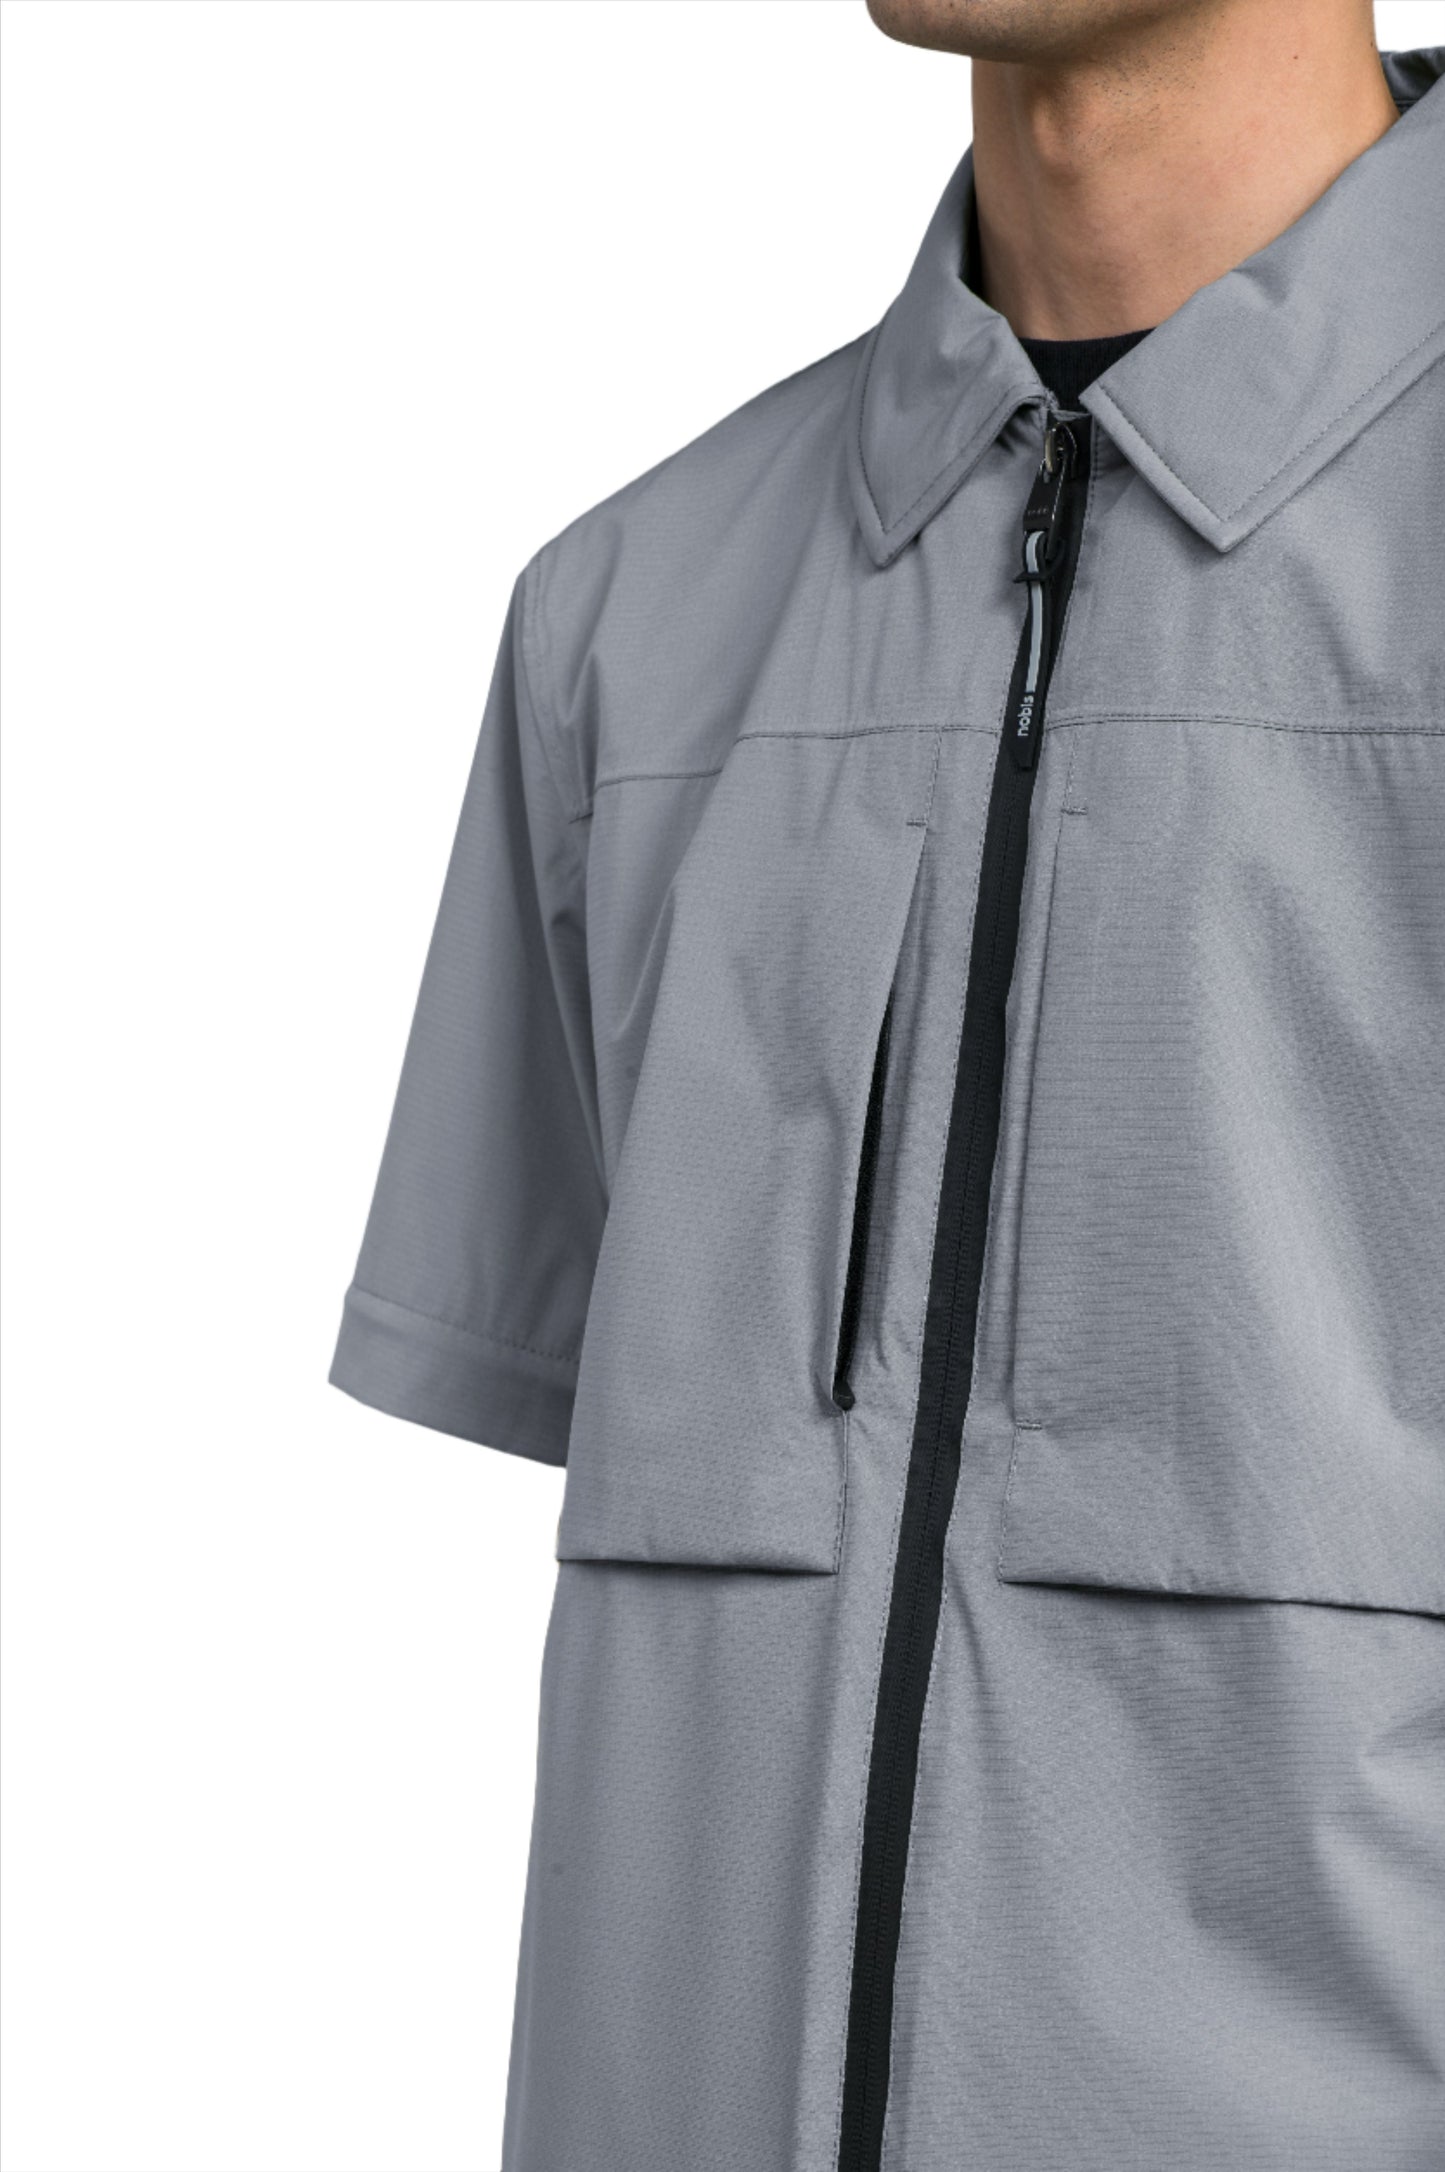 Thurlow Men's Performance Zip Off Sleeve Rain Shirt in hip length, convertible collar, patch chest zipper pockets, hidden in-seam pockets, zip off sleeves, centre front two-way zipper closure, in Concrete